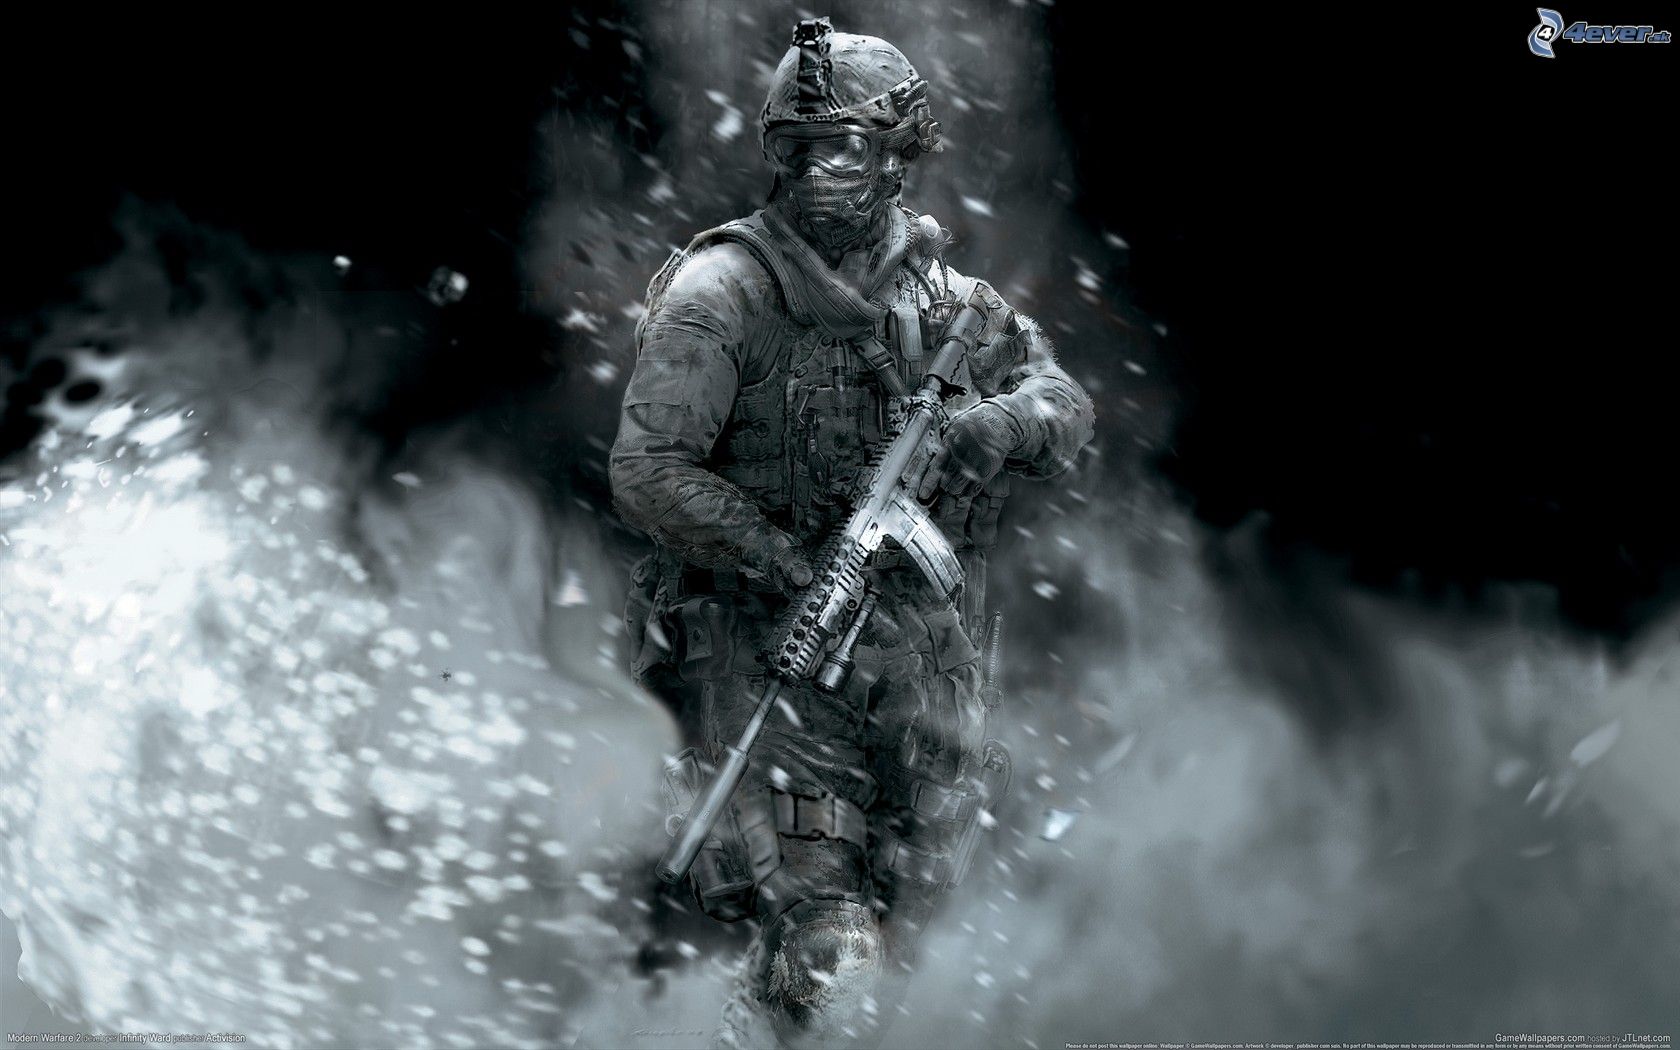 [obrazky.4ever.sk] Call of Duty Modern Warfare 2 2785131.jpg